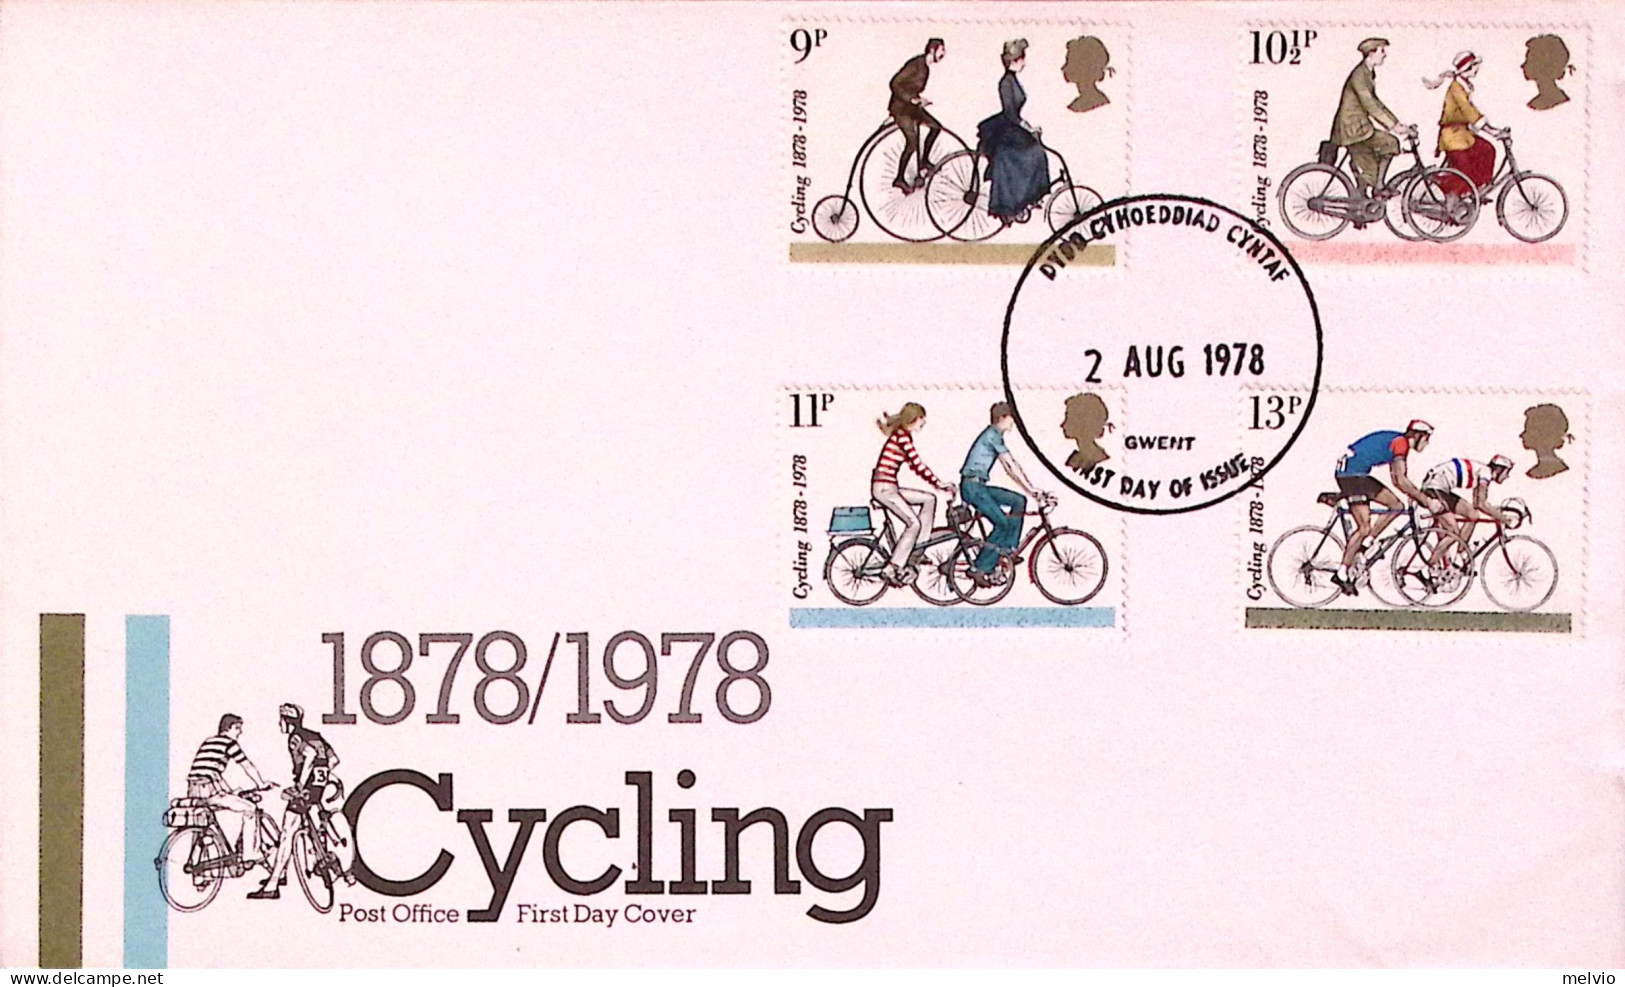 1978-GRAN BRETAGNA GREAT BRITAIN Touring Club Ciclistico Serie Cpl. (872/5) Fdc - Lettres & Documents